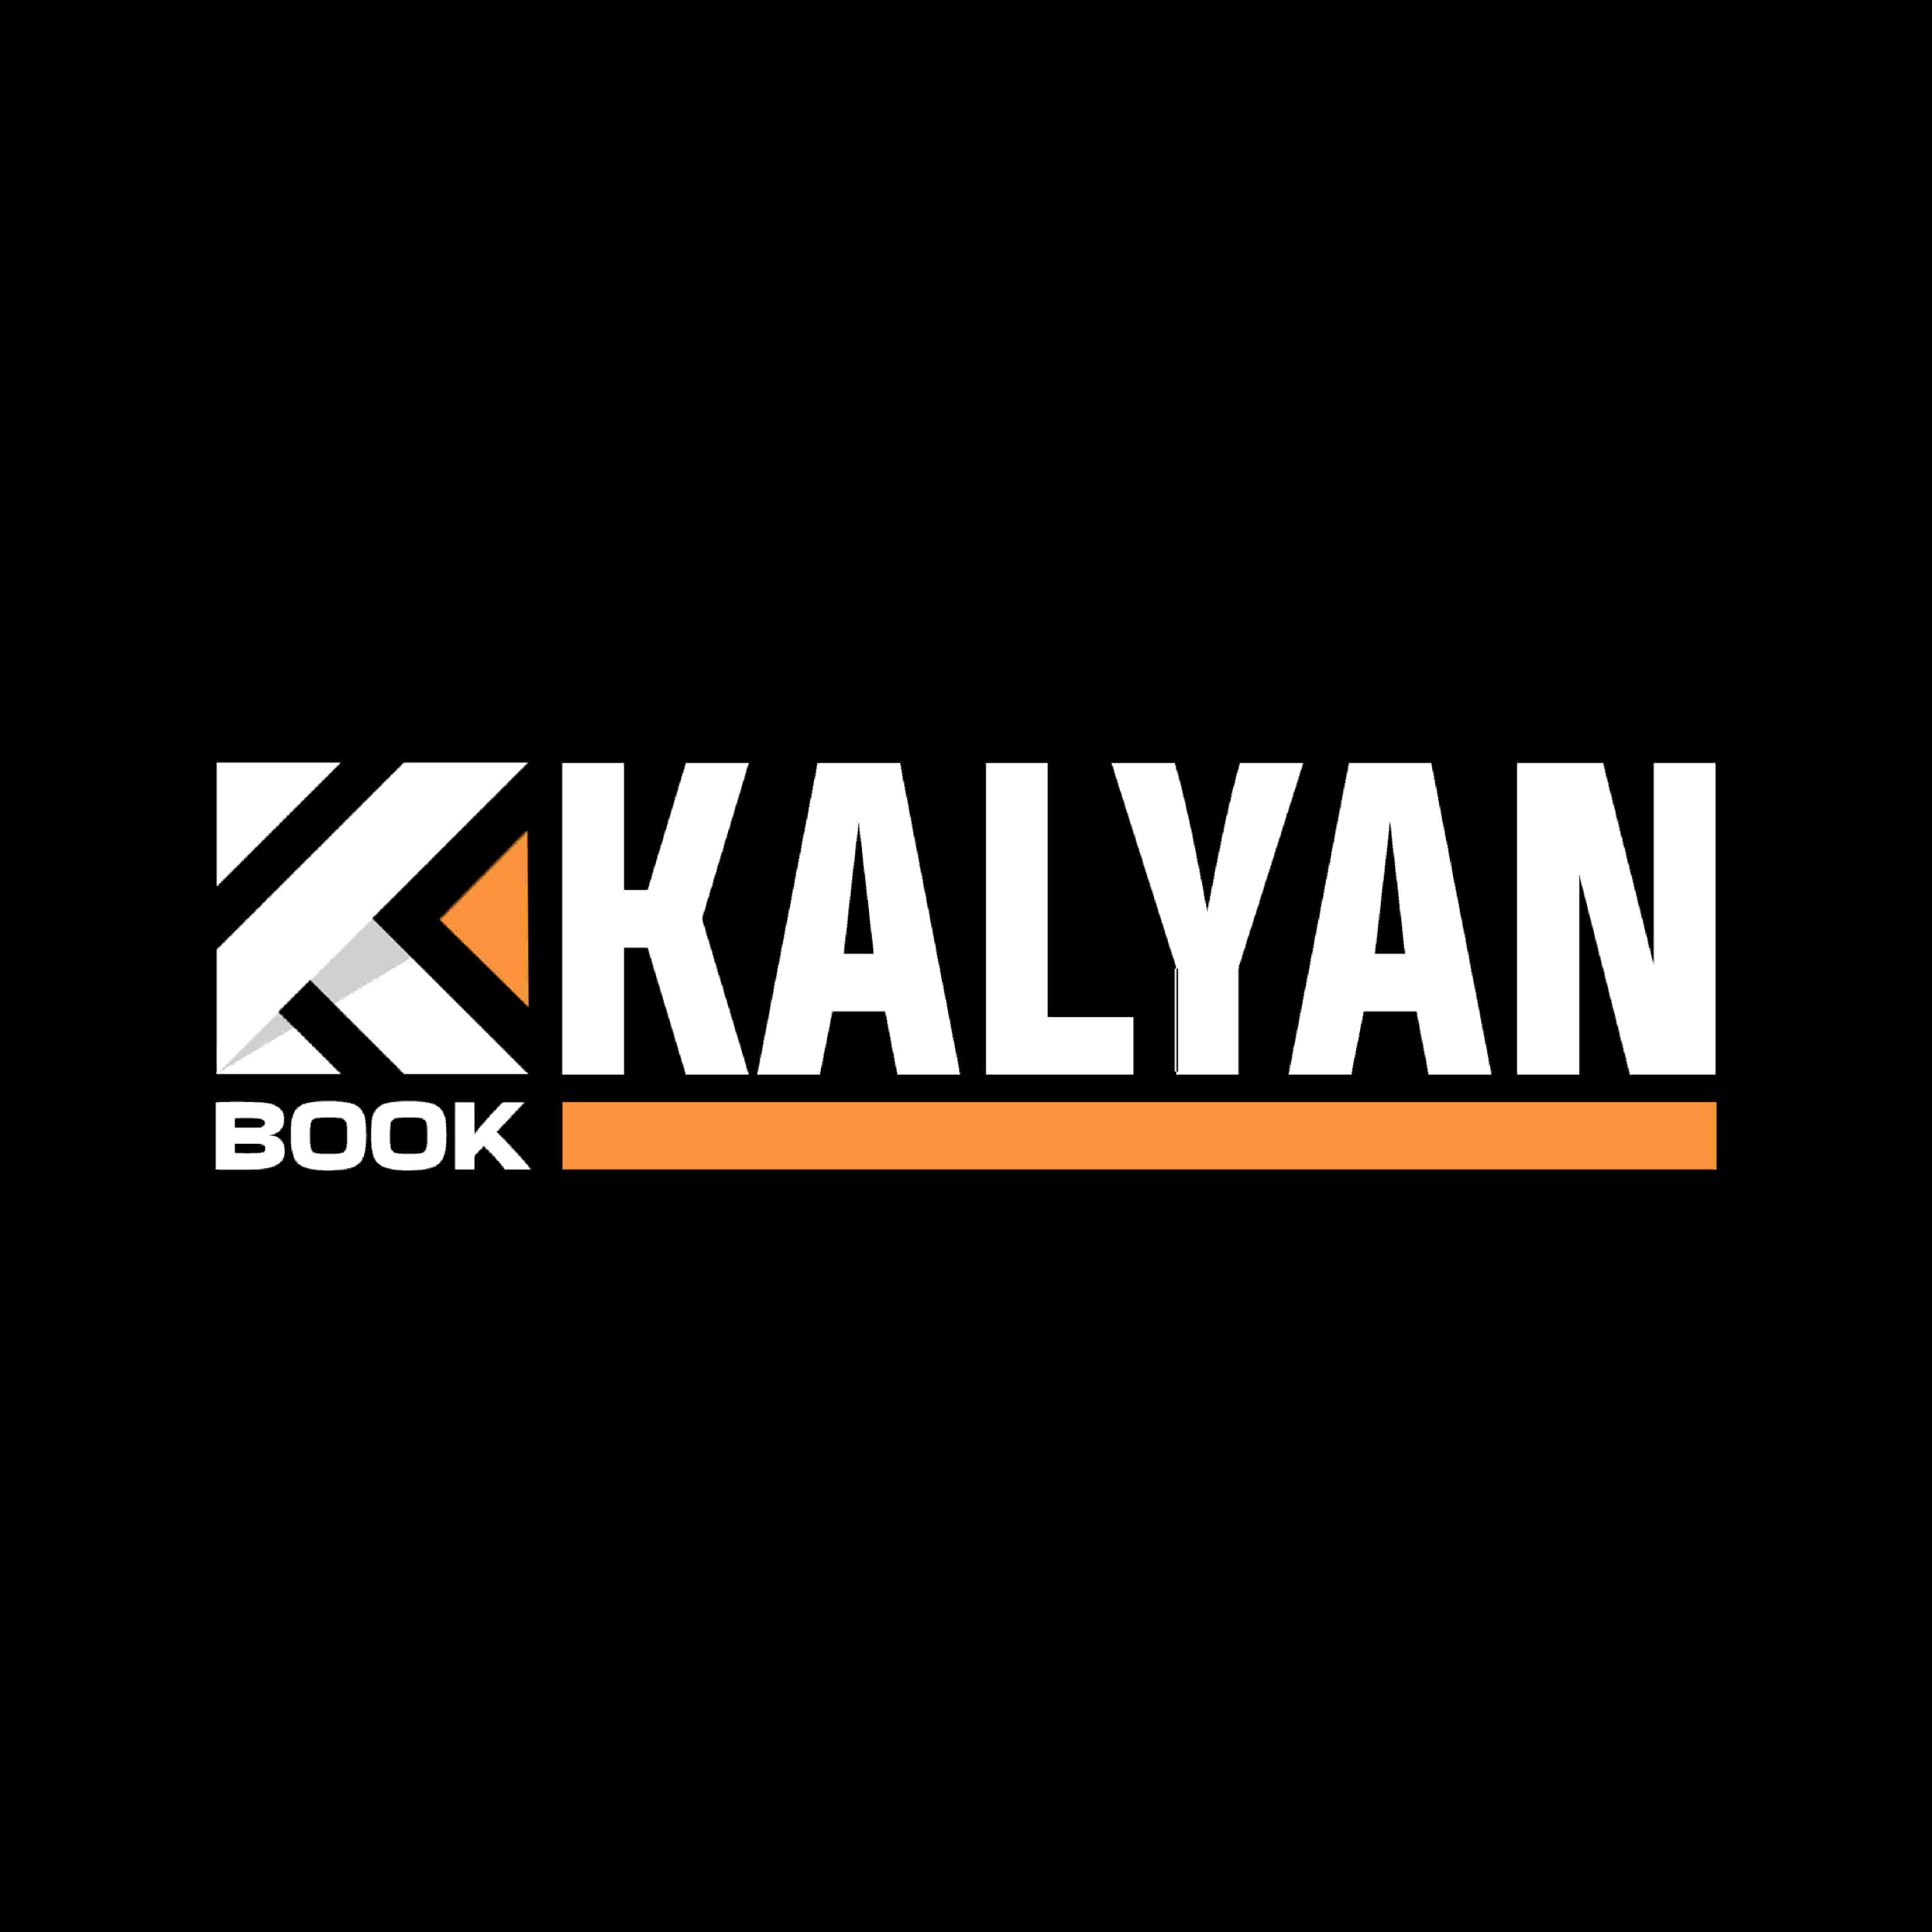 Best Online Book in Kerala kalyan Book